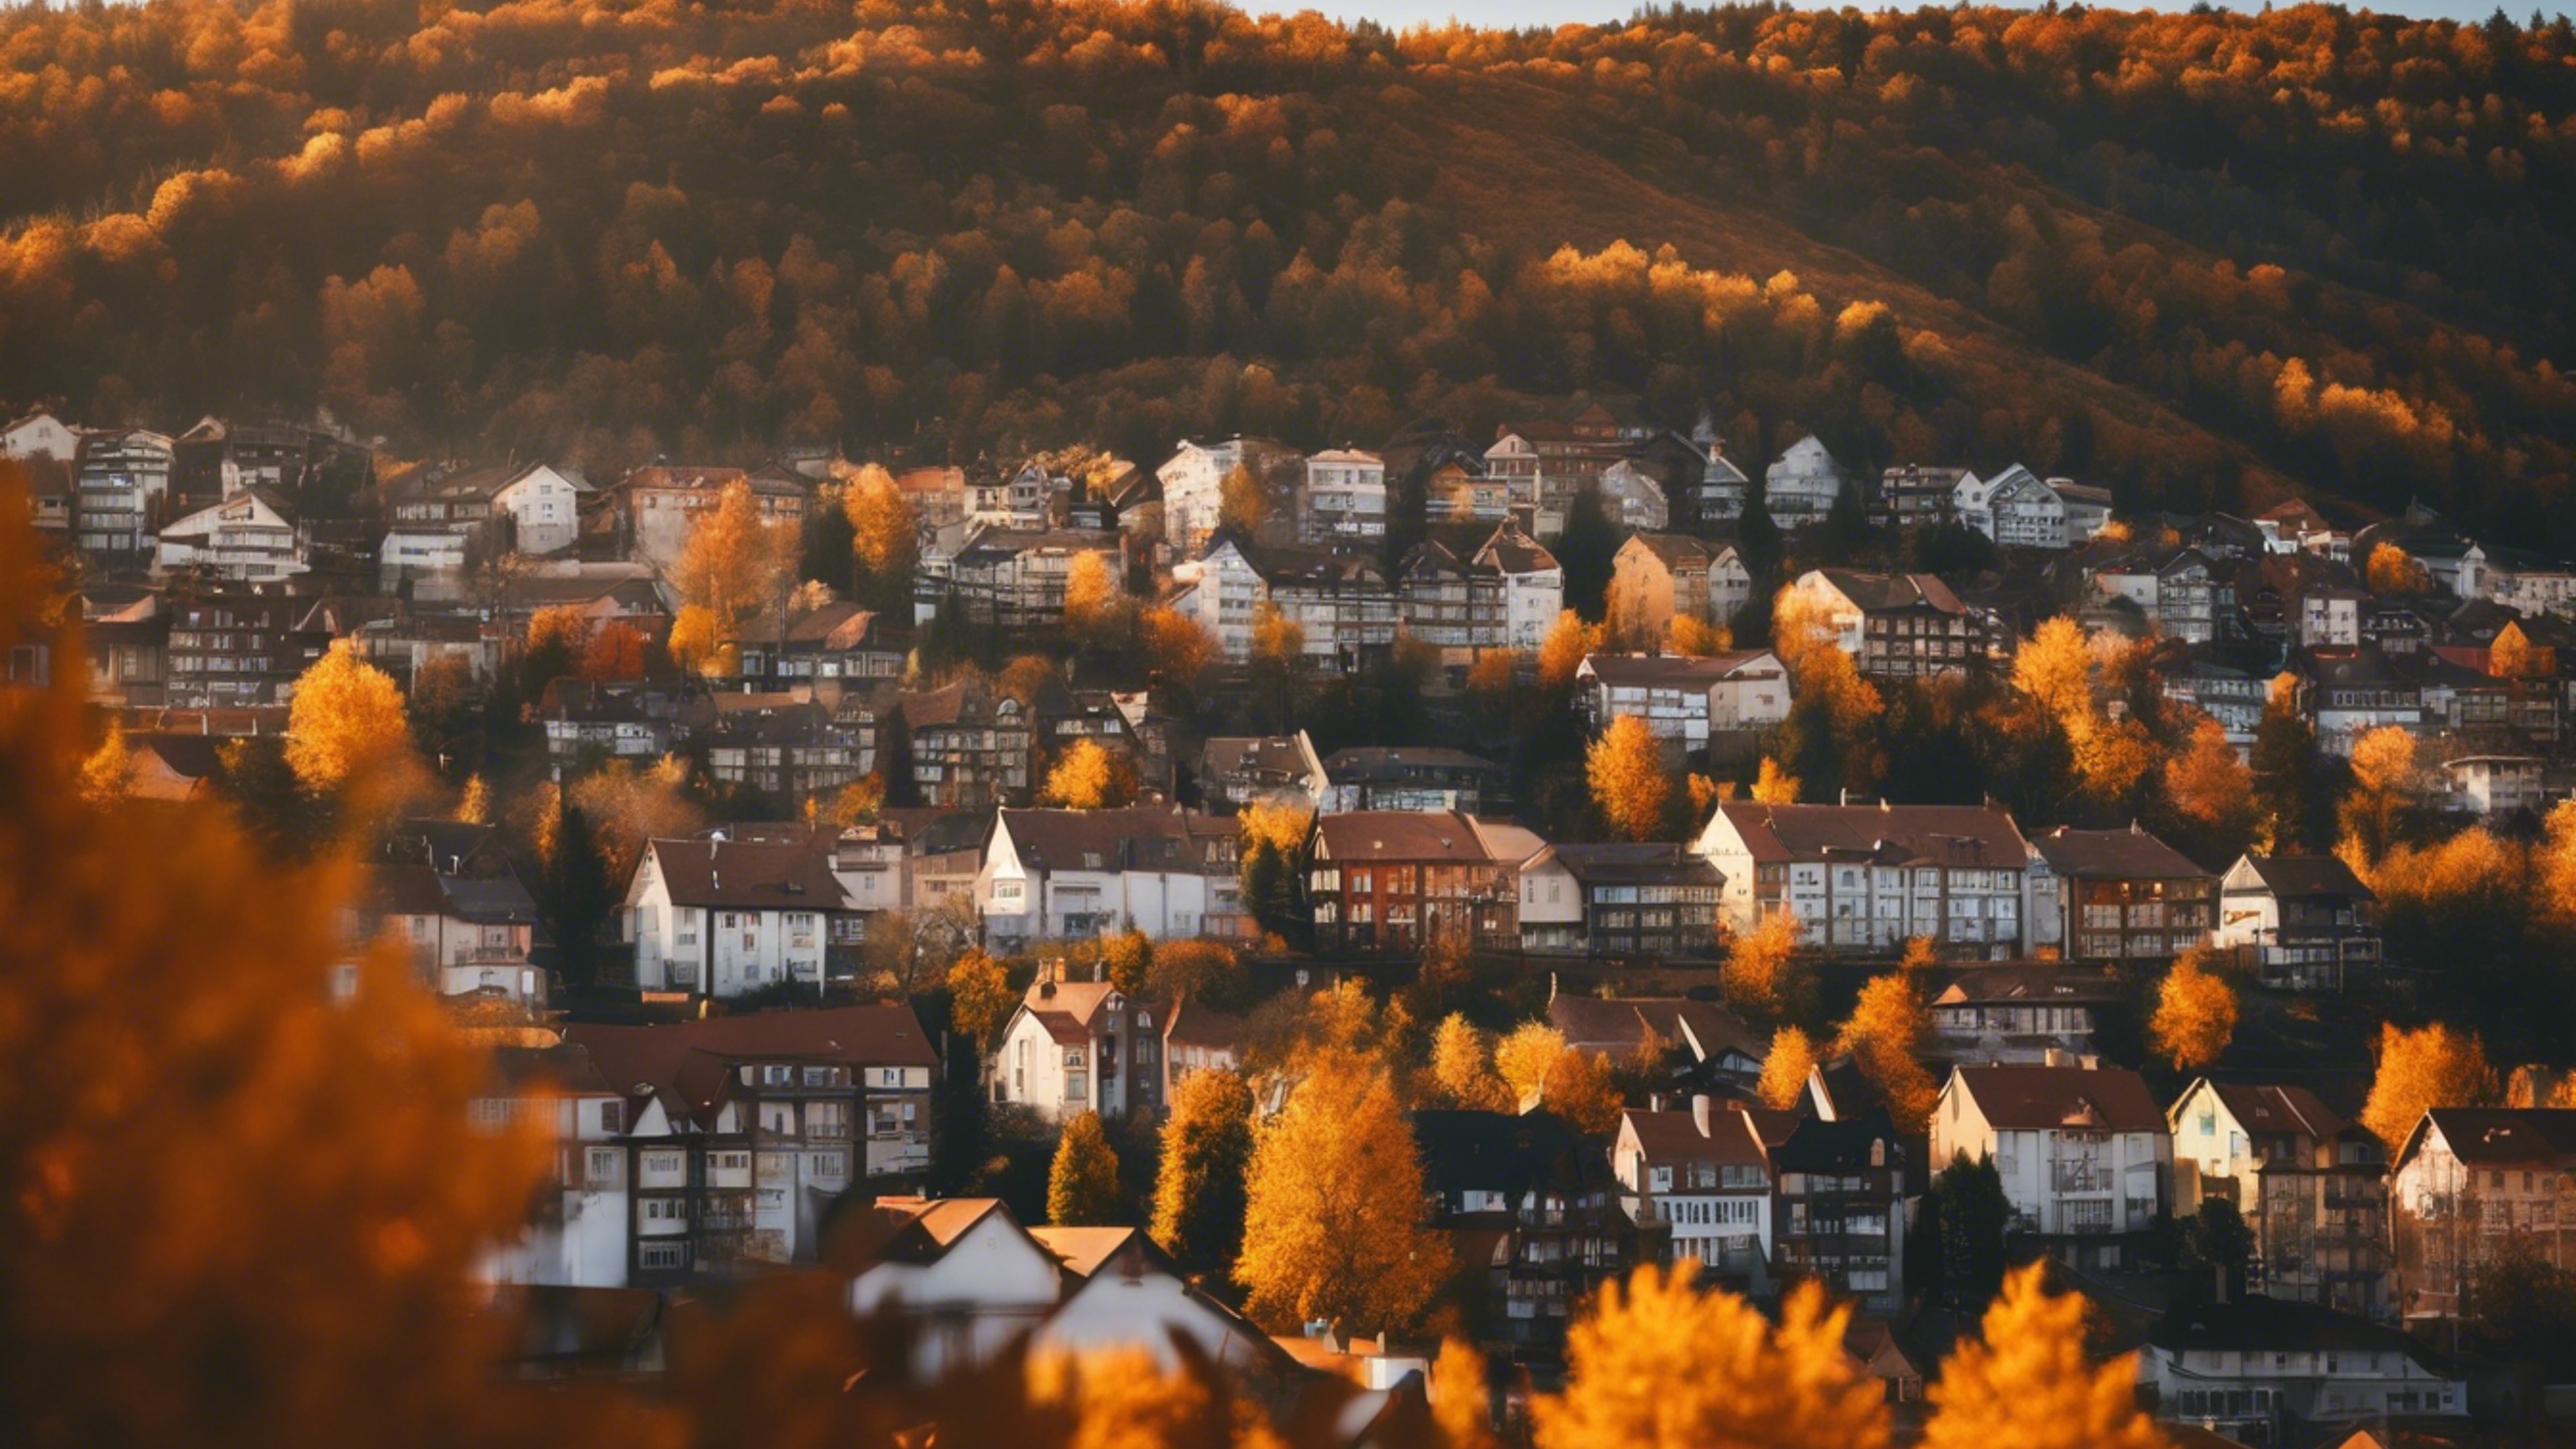 A calm skyline view of a mountain town in autumn, dappled in hues of orange and gold. Tapeta[cb2d4b5eada64efeb989]